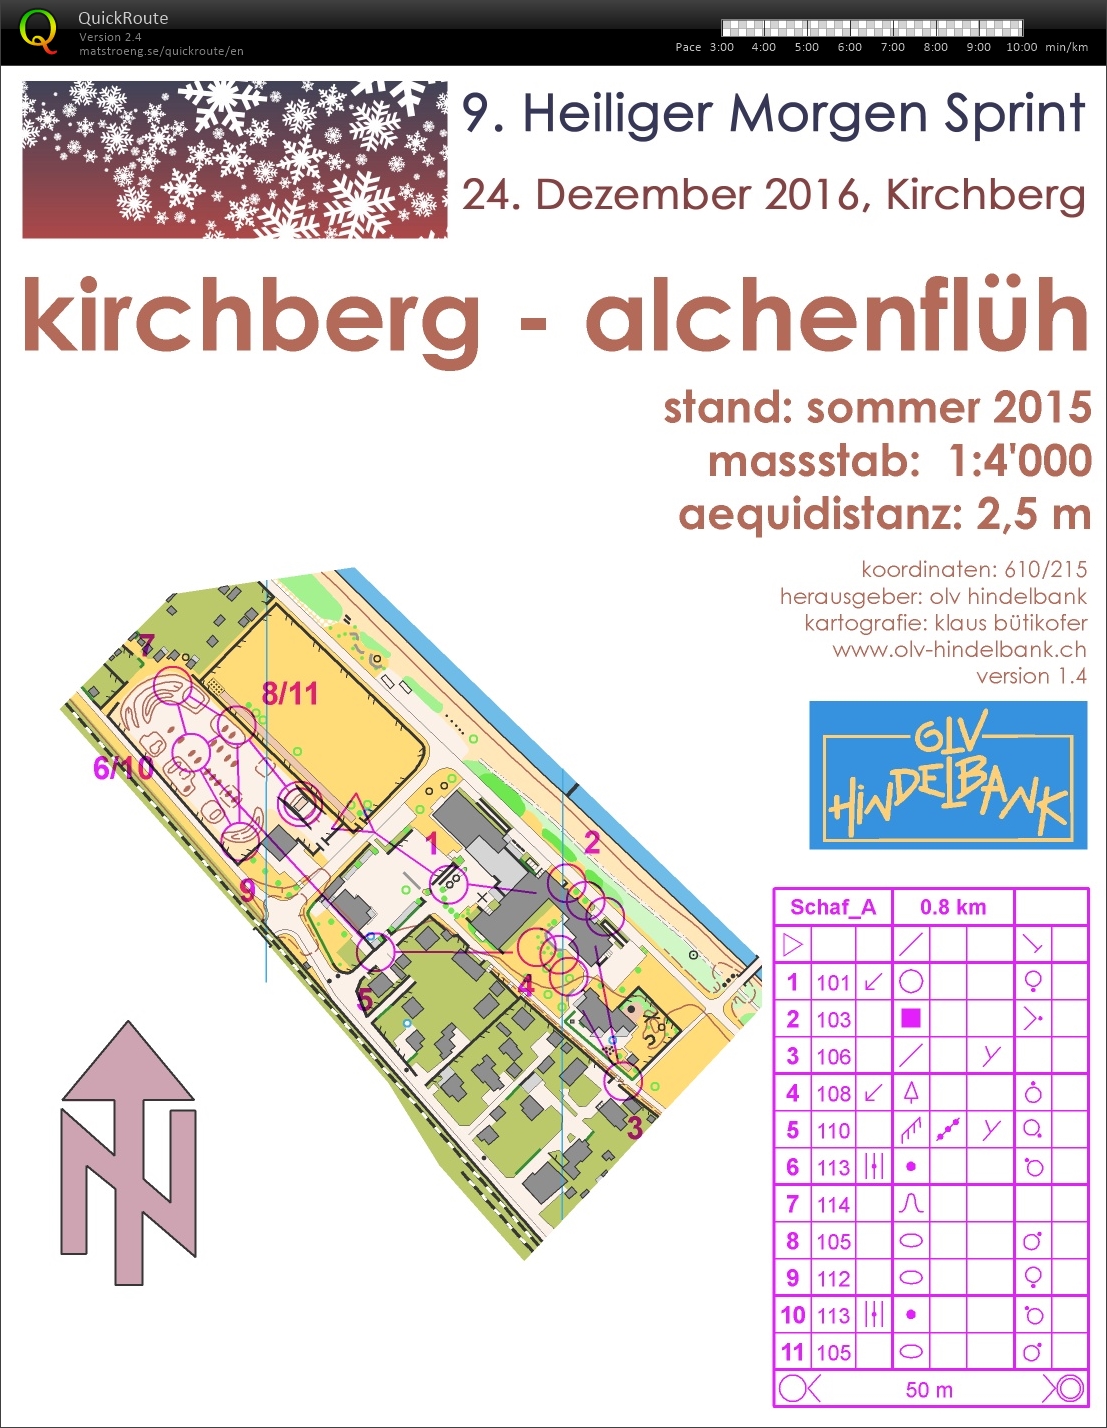 Heiligmorgesprint - Prolog (24/12/2016)